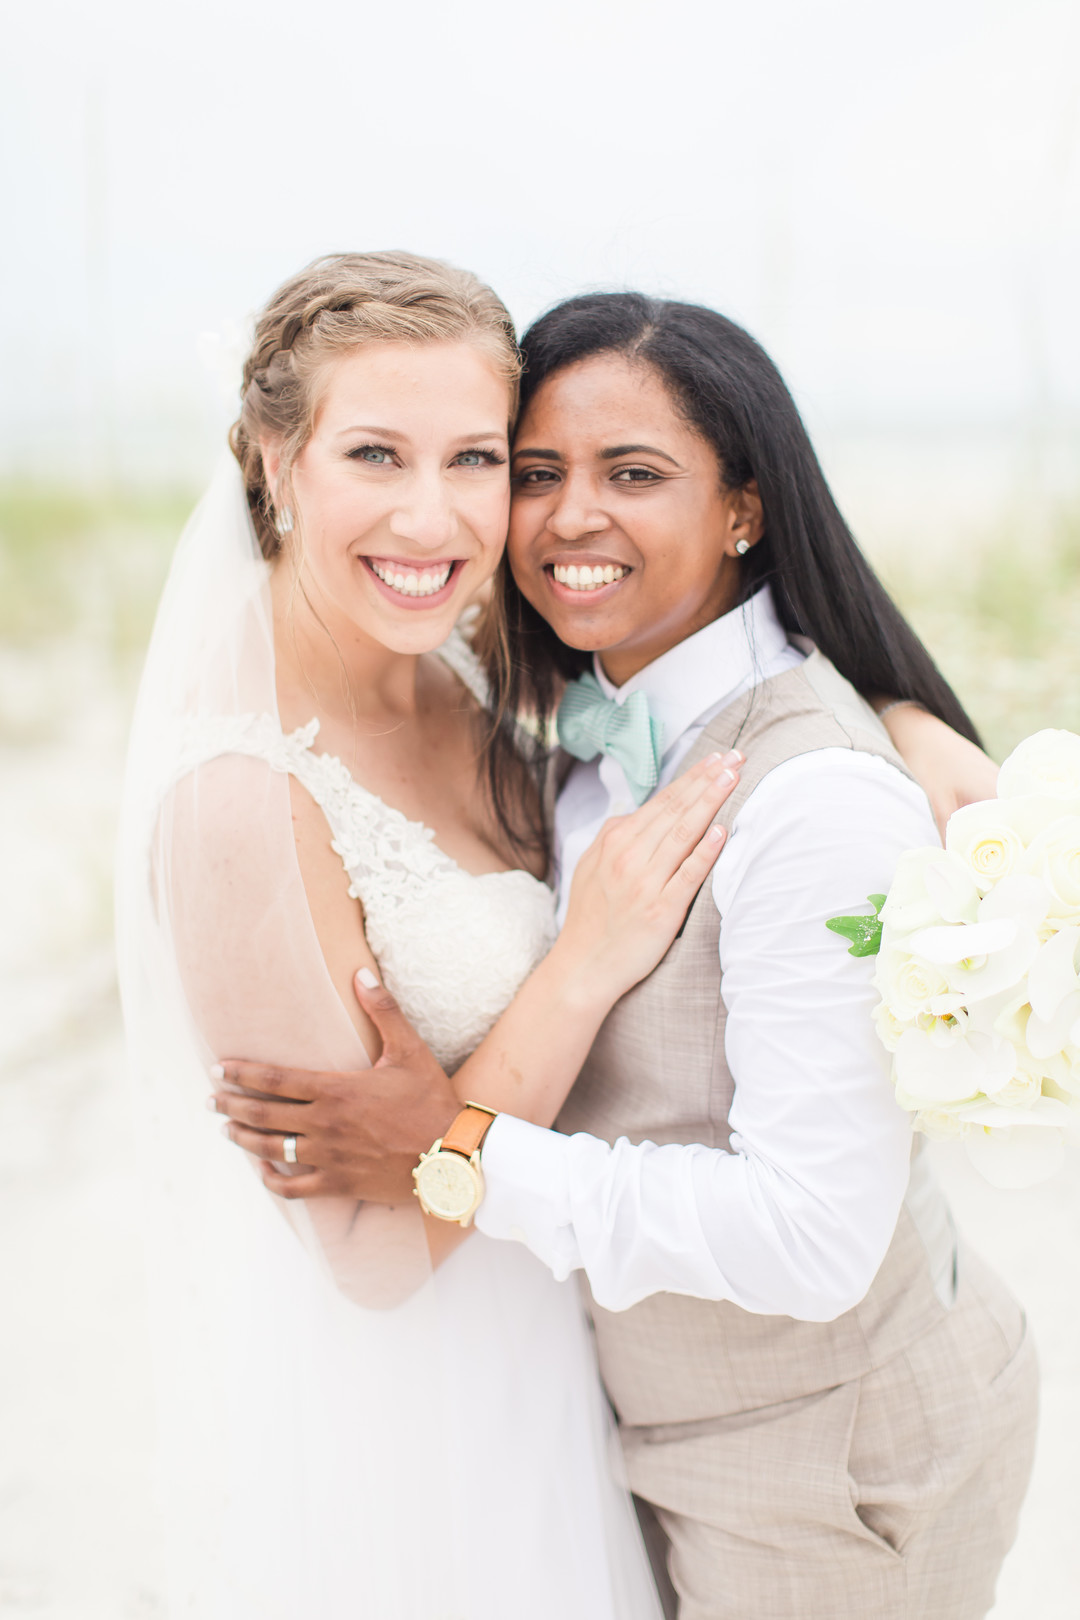 Tropical blue and green beach wedding in St. Petersburg, Florida two brides lesbian wedding white dress tan suit destination LGBTQ+ weddings